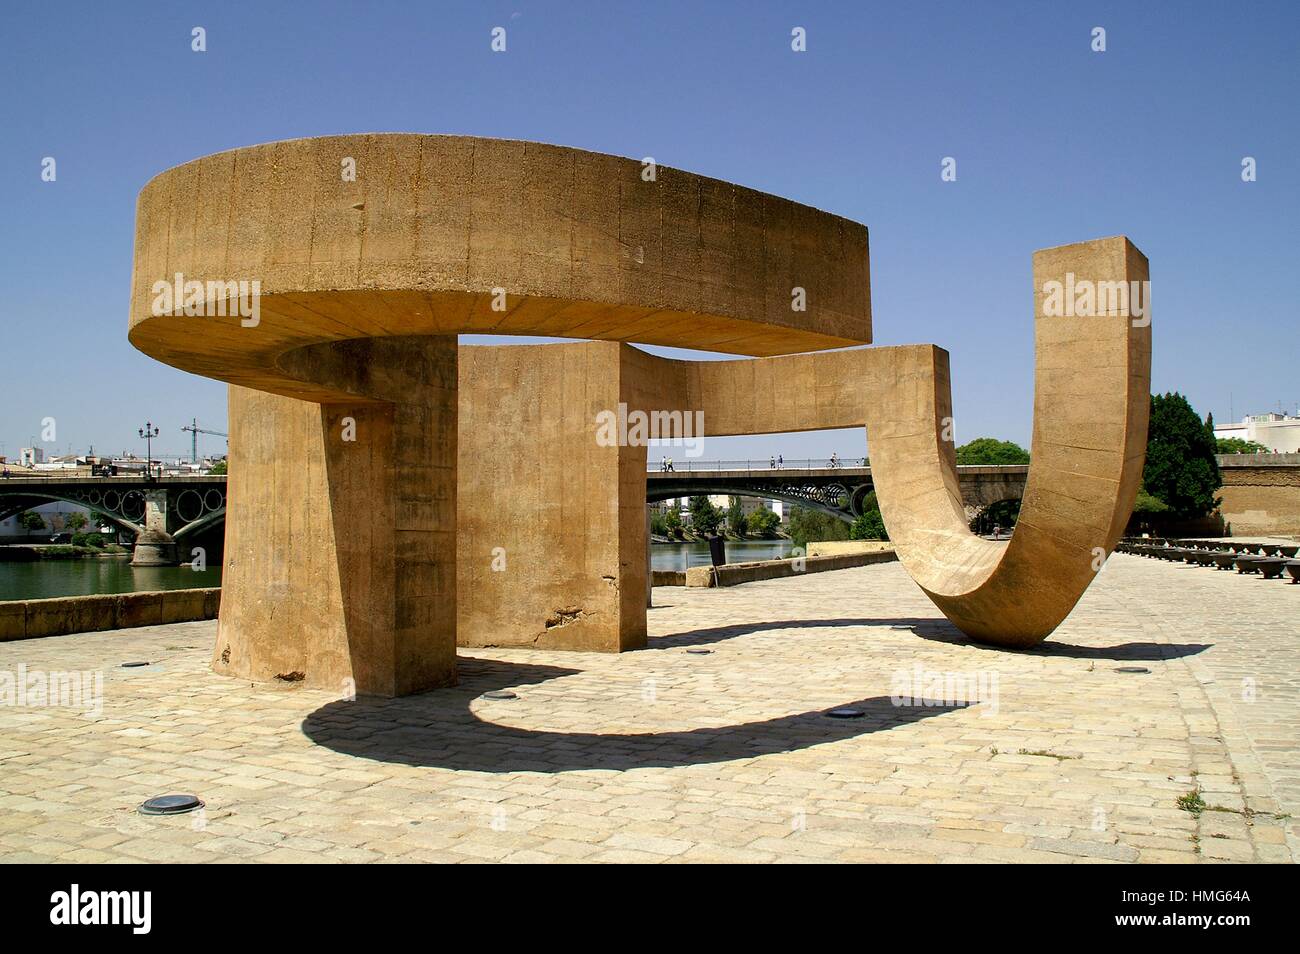 Sevilla (España). Monumento a la tolerancia de Eduardo Chillida en la ciudad de Sevilla. Foto de stock